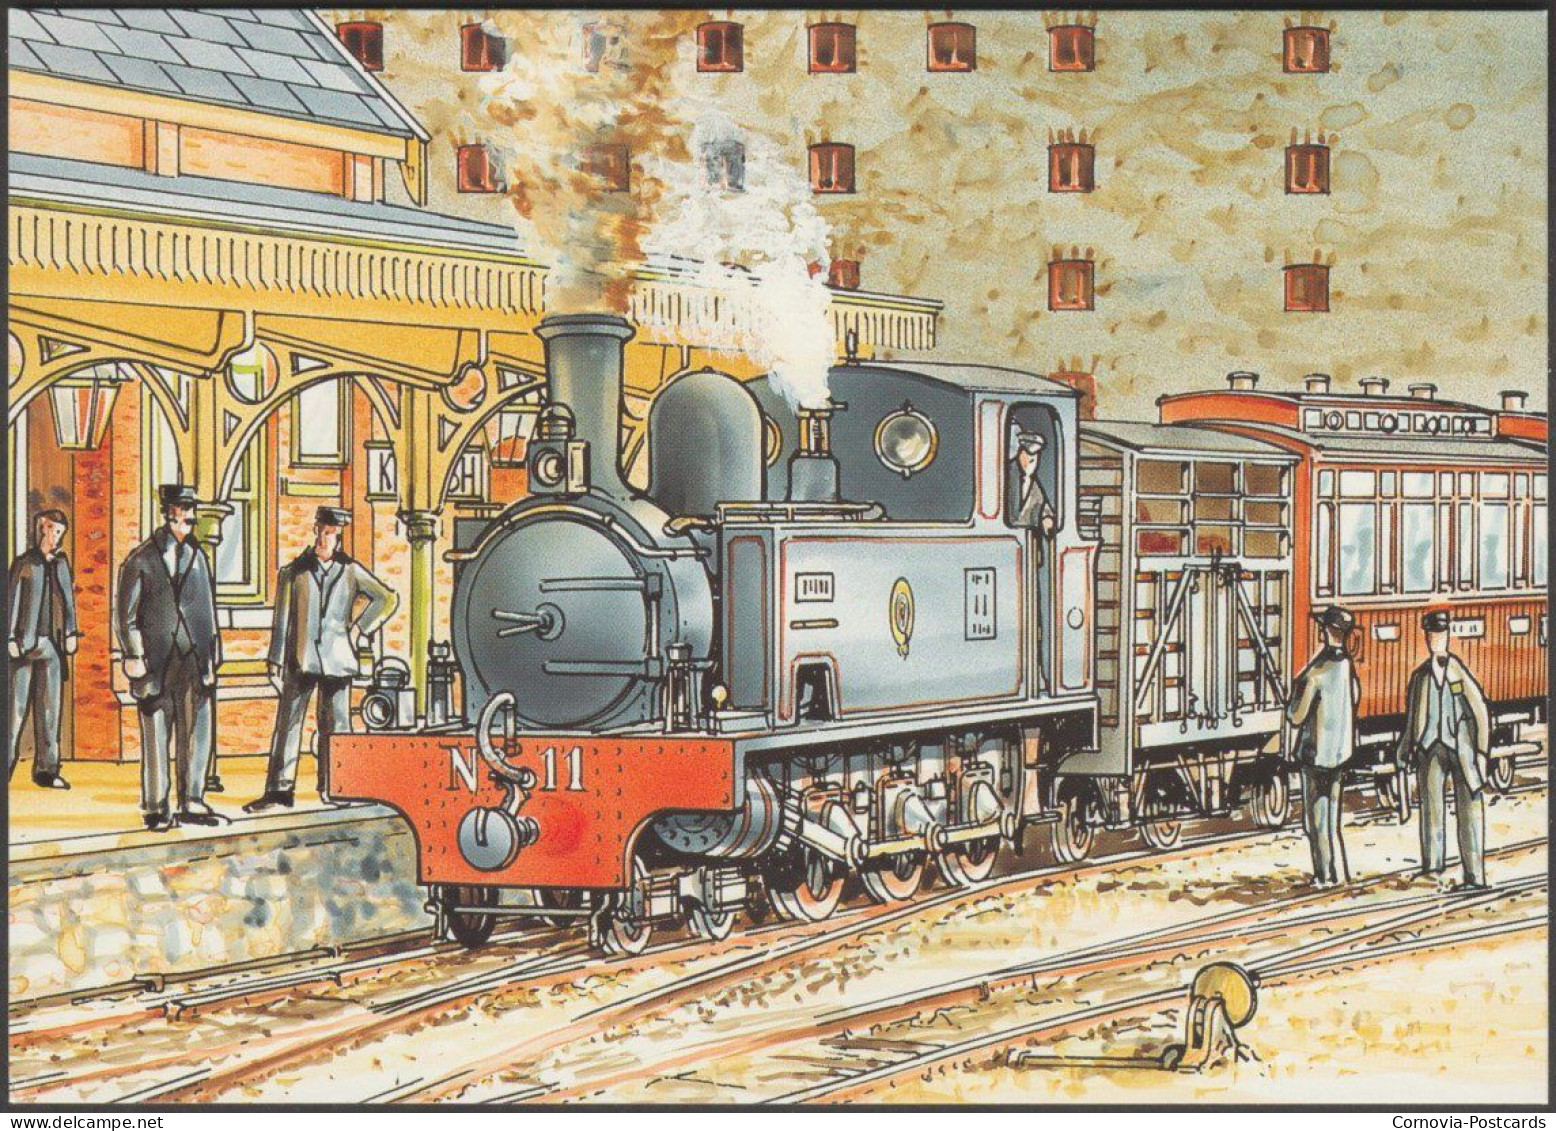 West Clare Railway By Charles Rycraft, 28p Stamp, 1995 - An Post Maximum Card - Tarjetas – Máxima